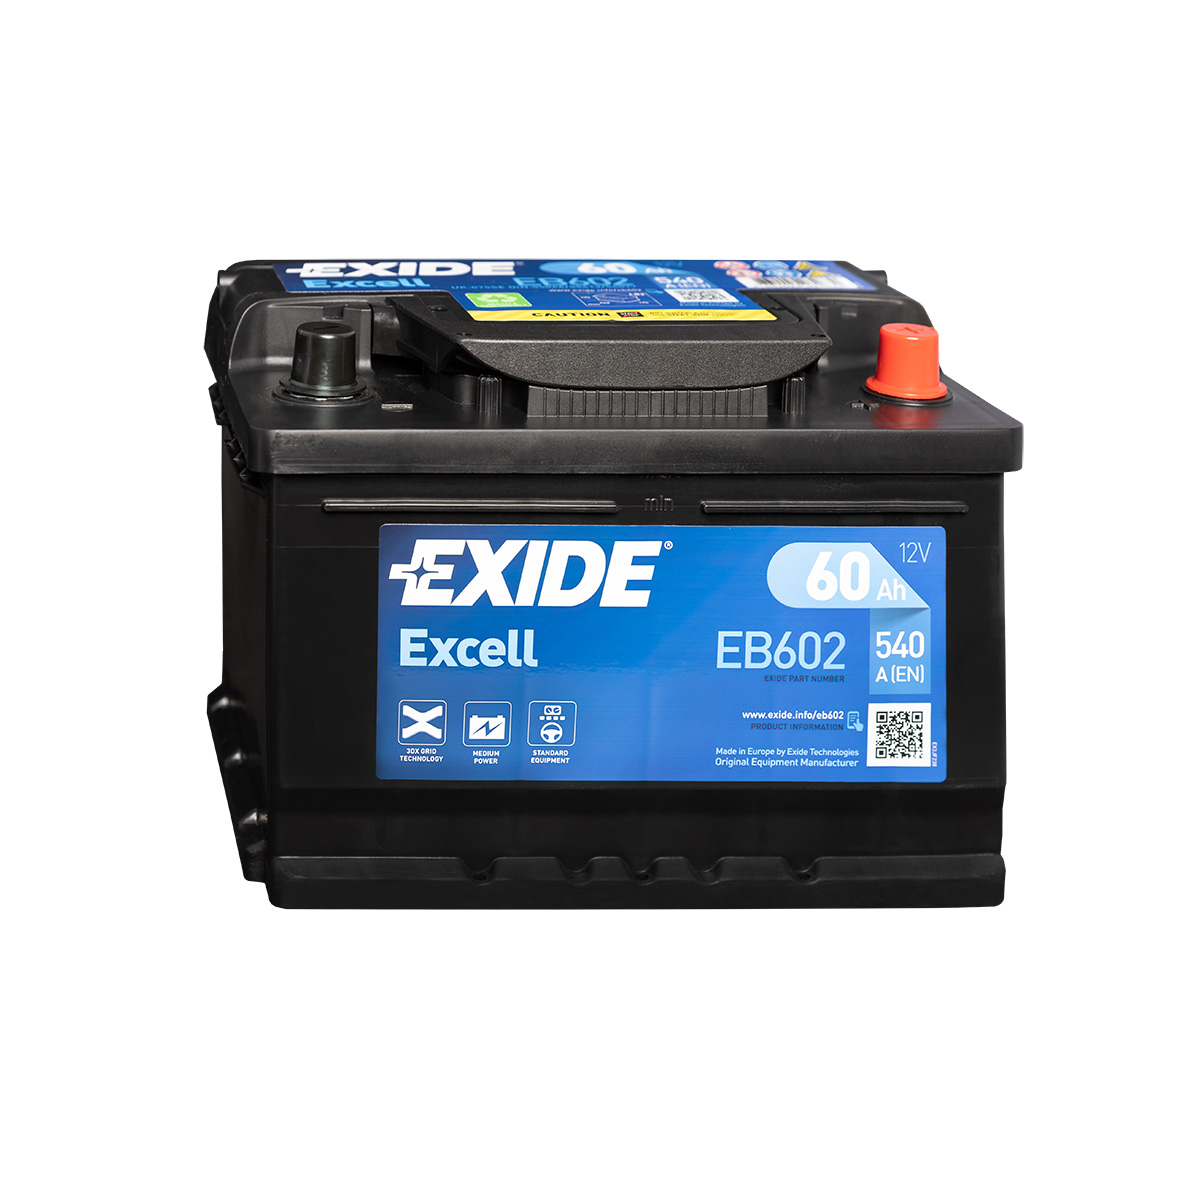 Exide Excell EB602 12V 60Ah Autobatterie